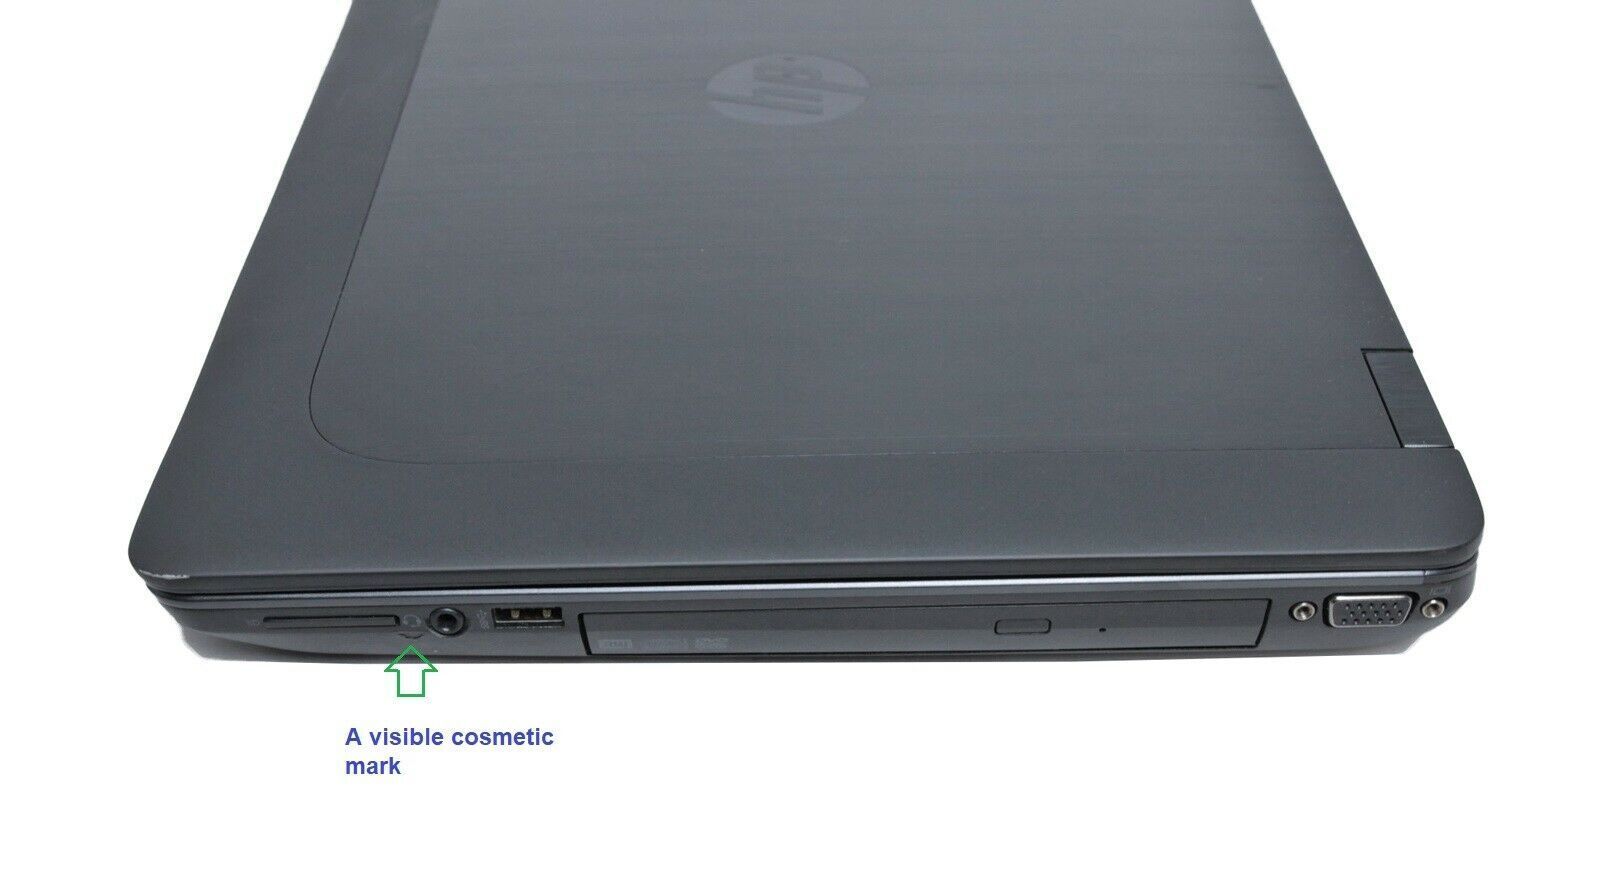 HP ZBook 15 G2 CAD Laptop: 32GB RAM, Core i7, 256GB SSD+HDD, Warranty, VAT - CruiseTech